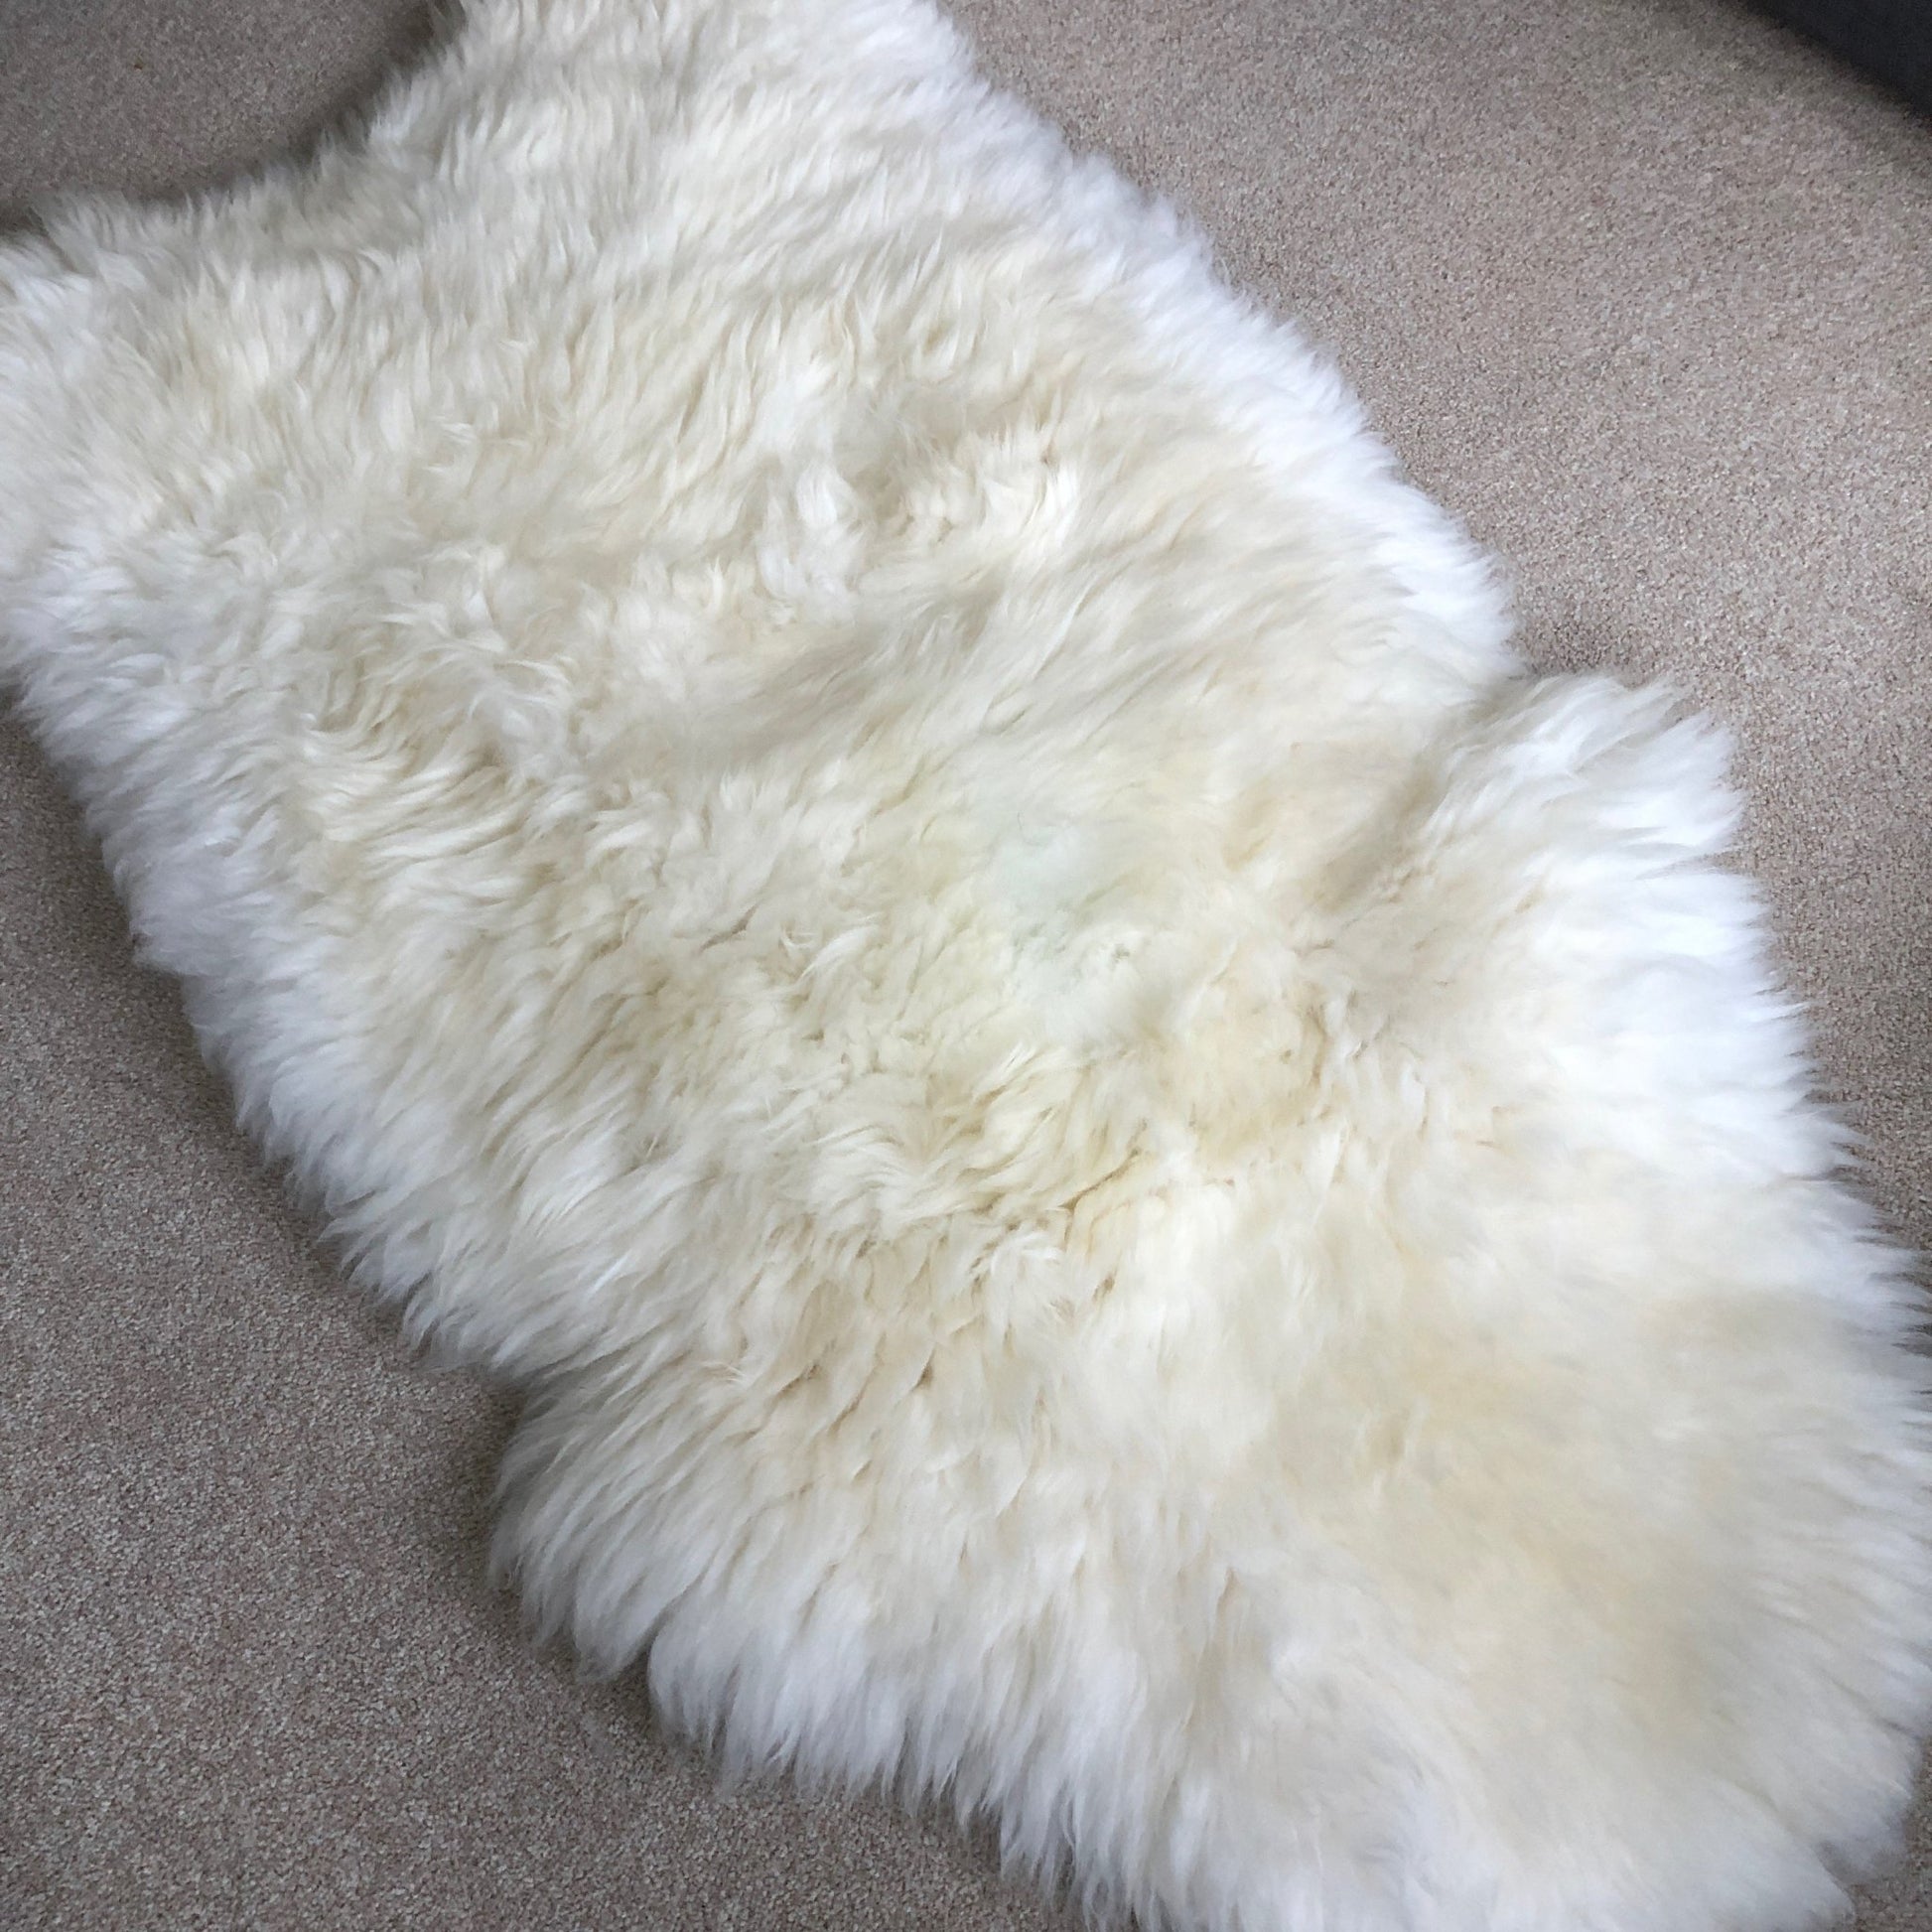 XXXL 130cm+ (51”+) Top Quality British White Sheepskin Rug 100% Natural Free-range UK Ecofriendly Huge Sheepskin Skin - Wildash London